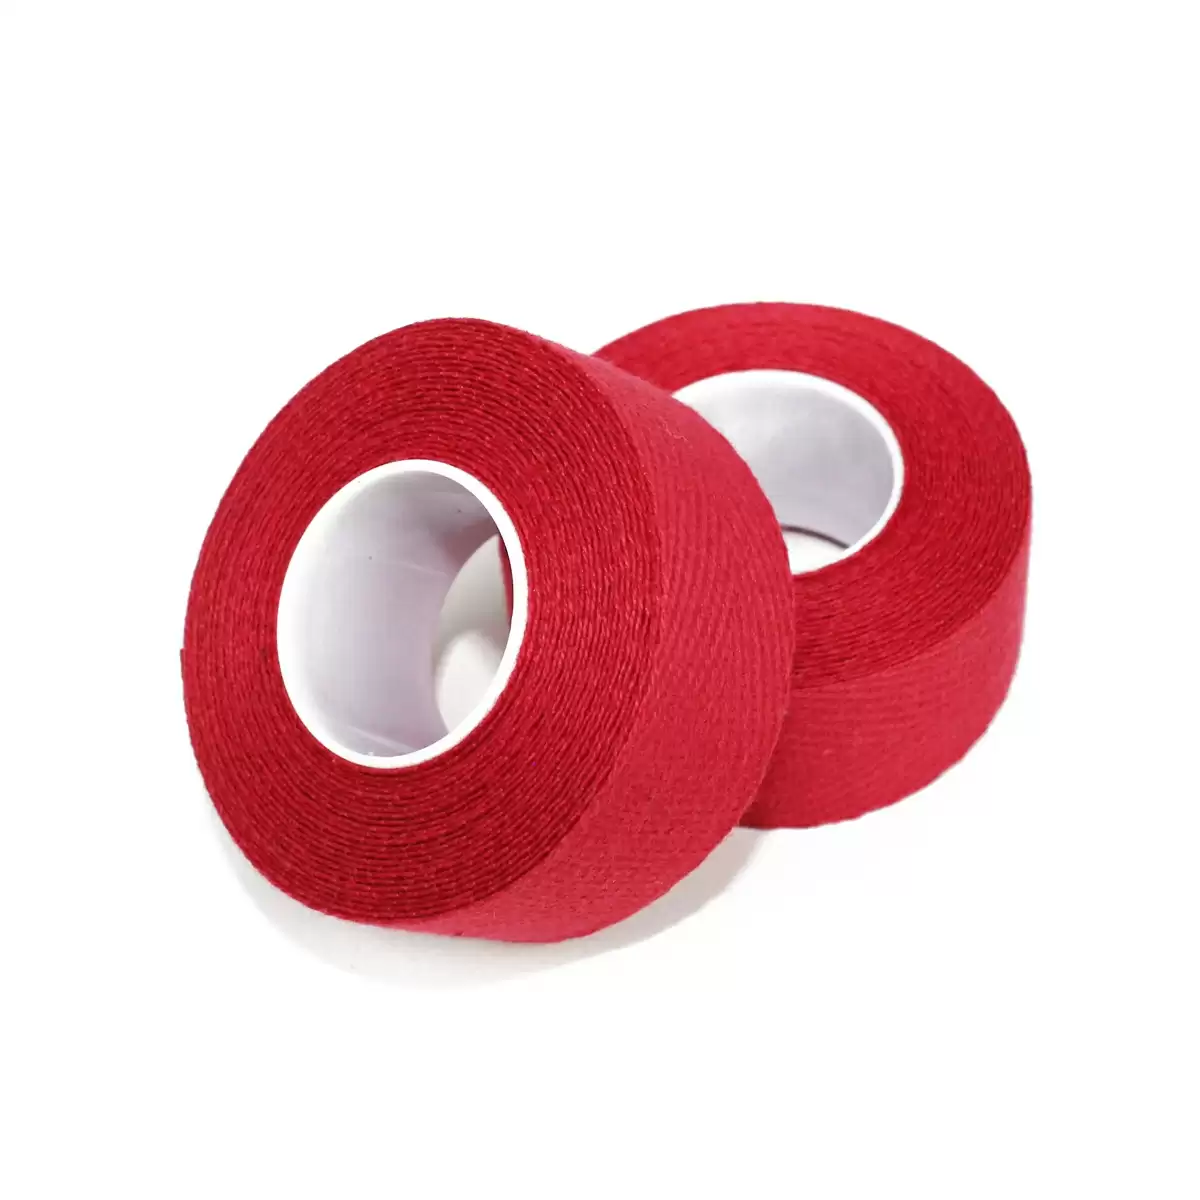 Pair cotton vintage retrò handlebar tape red - image